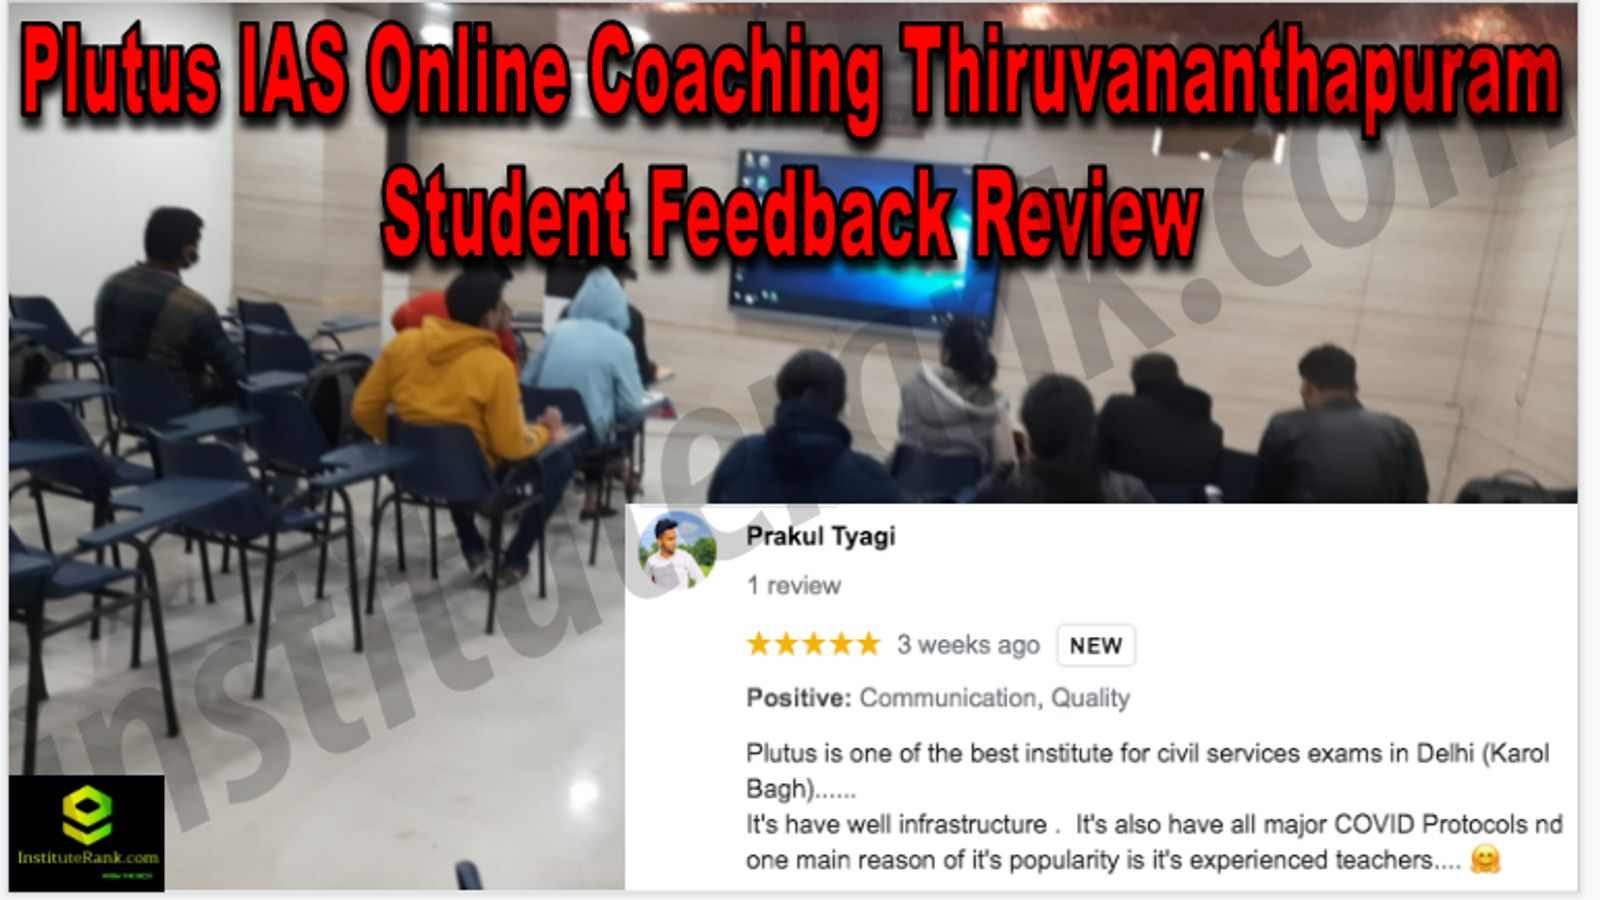 Plutus IAS Online Coaching Thiruvananthapuram Student Feedback Reviews